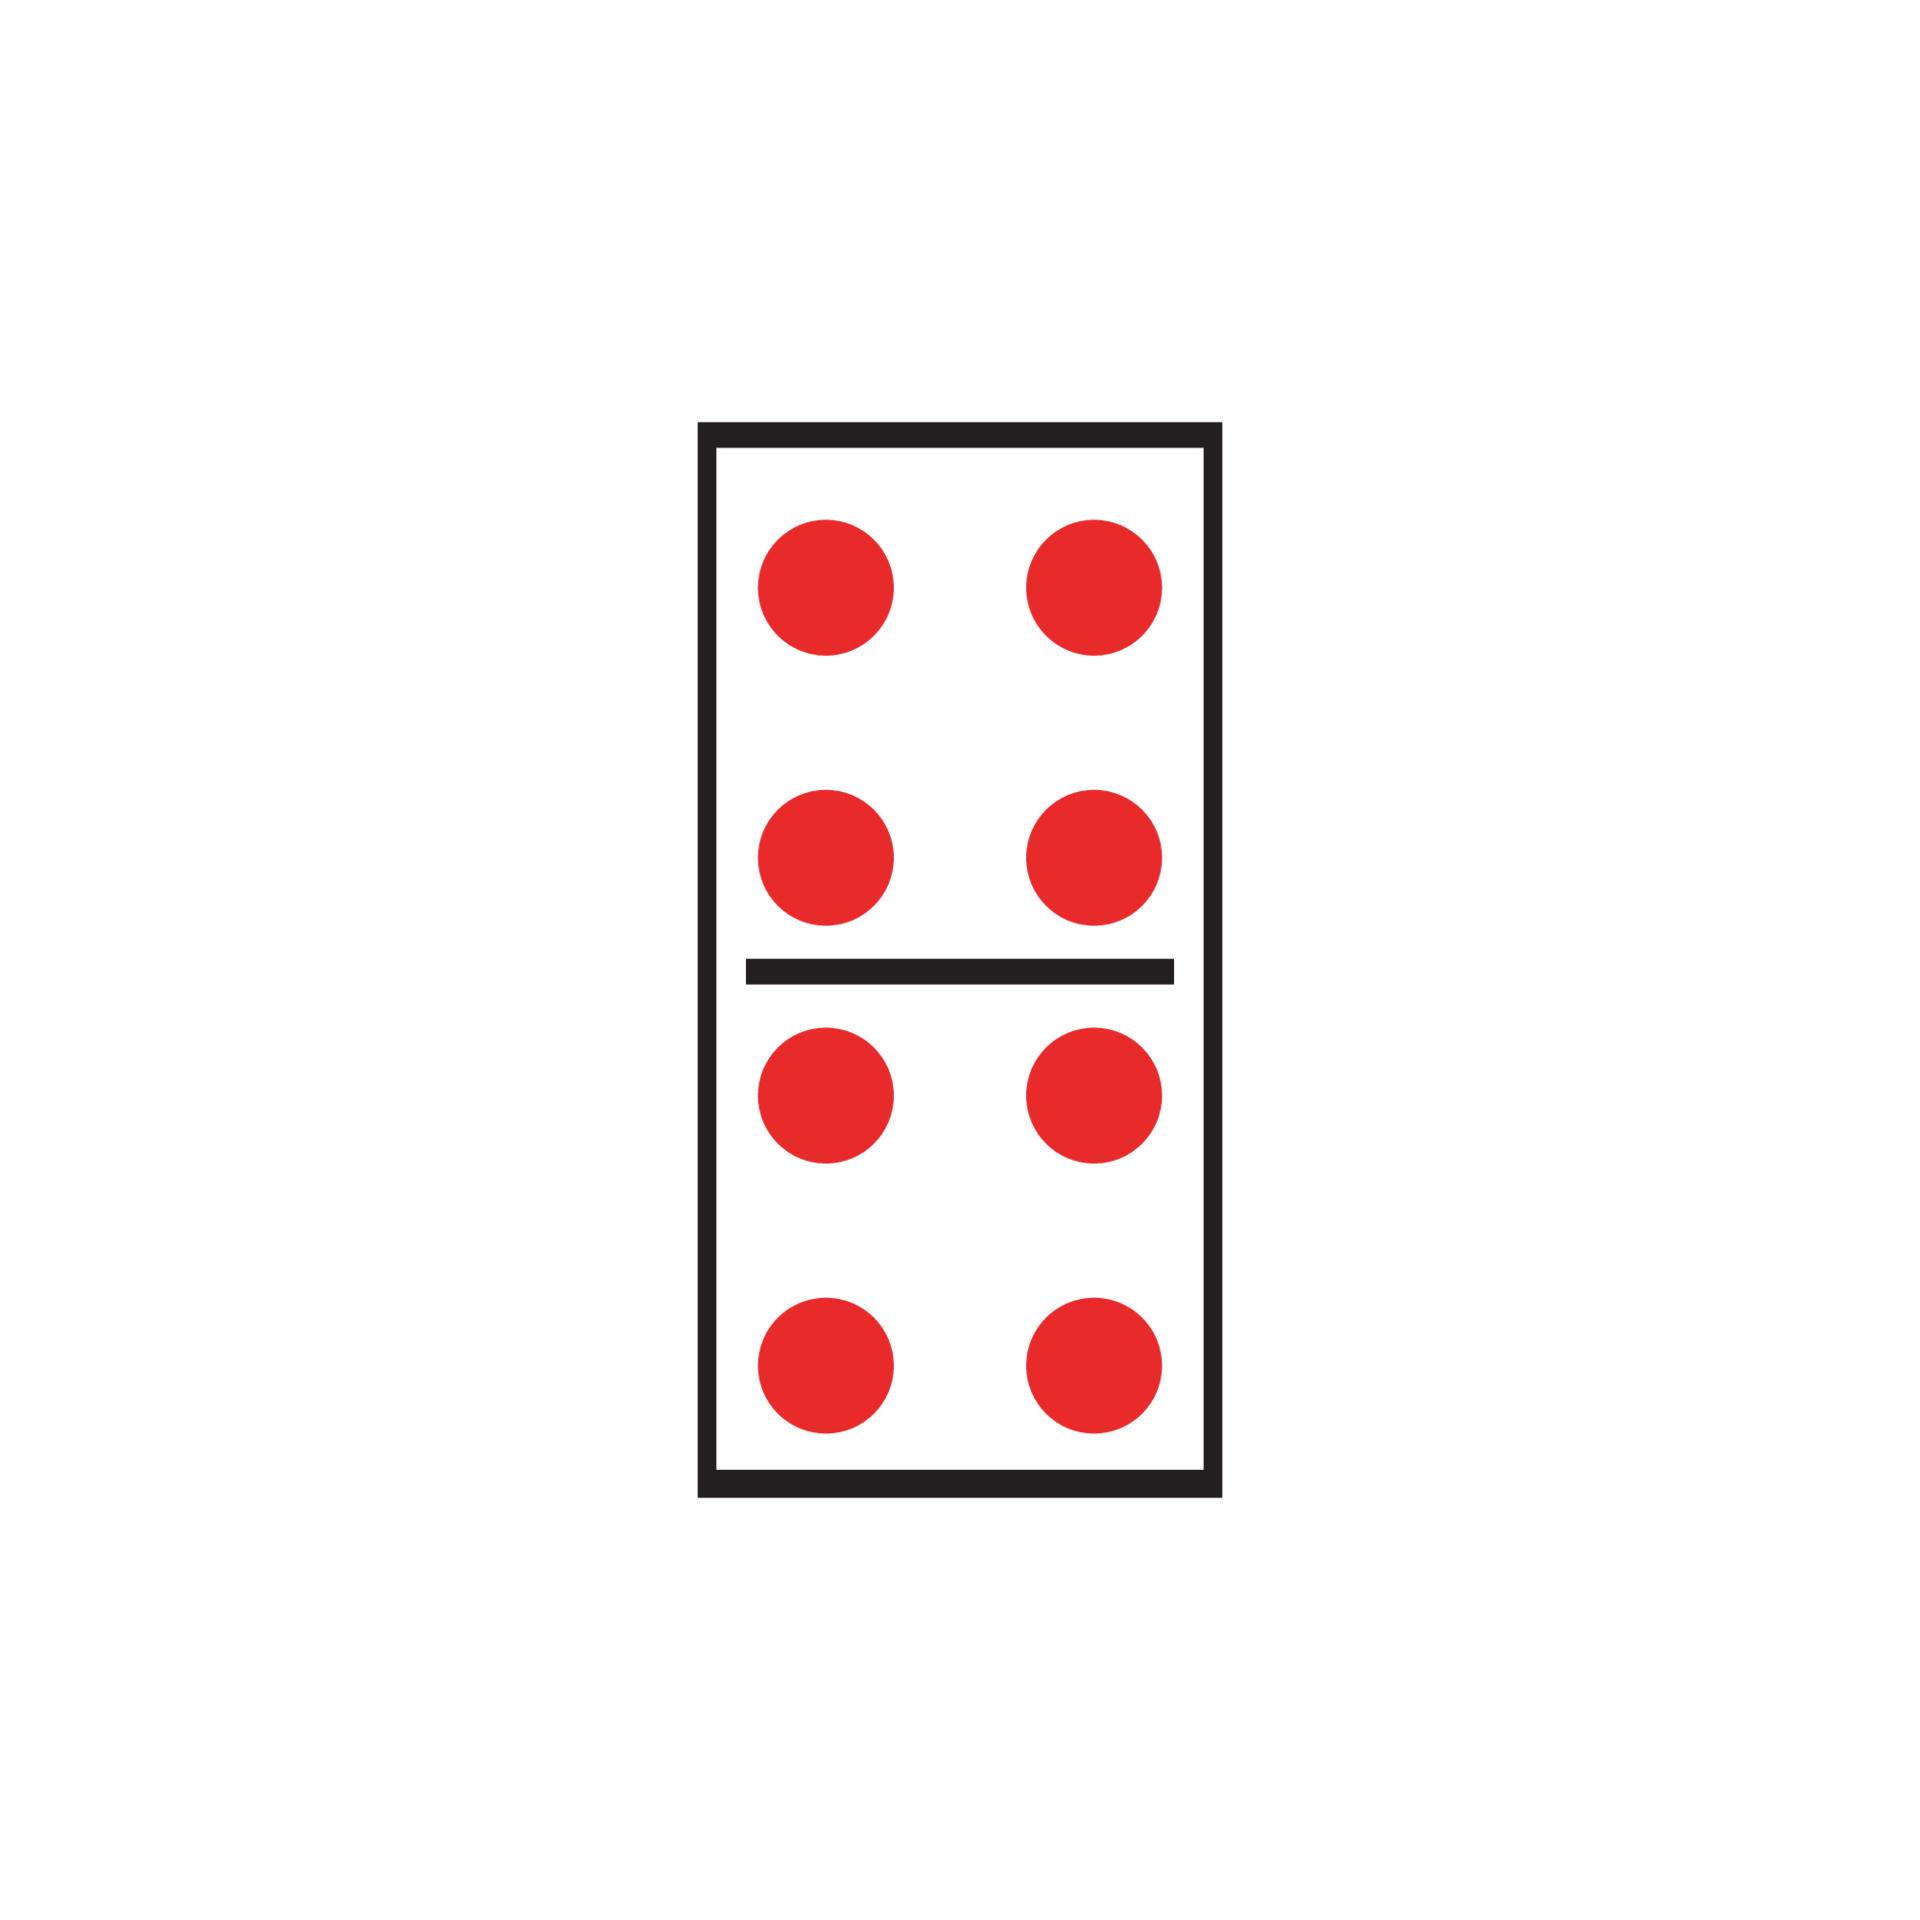 logotipo de jogos de dominó 13420403 Vetor no Vecteezy